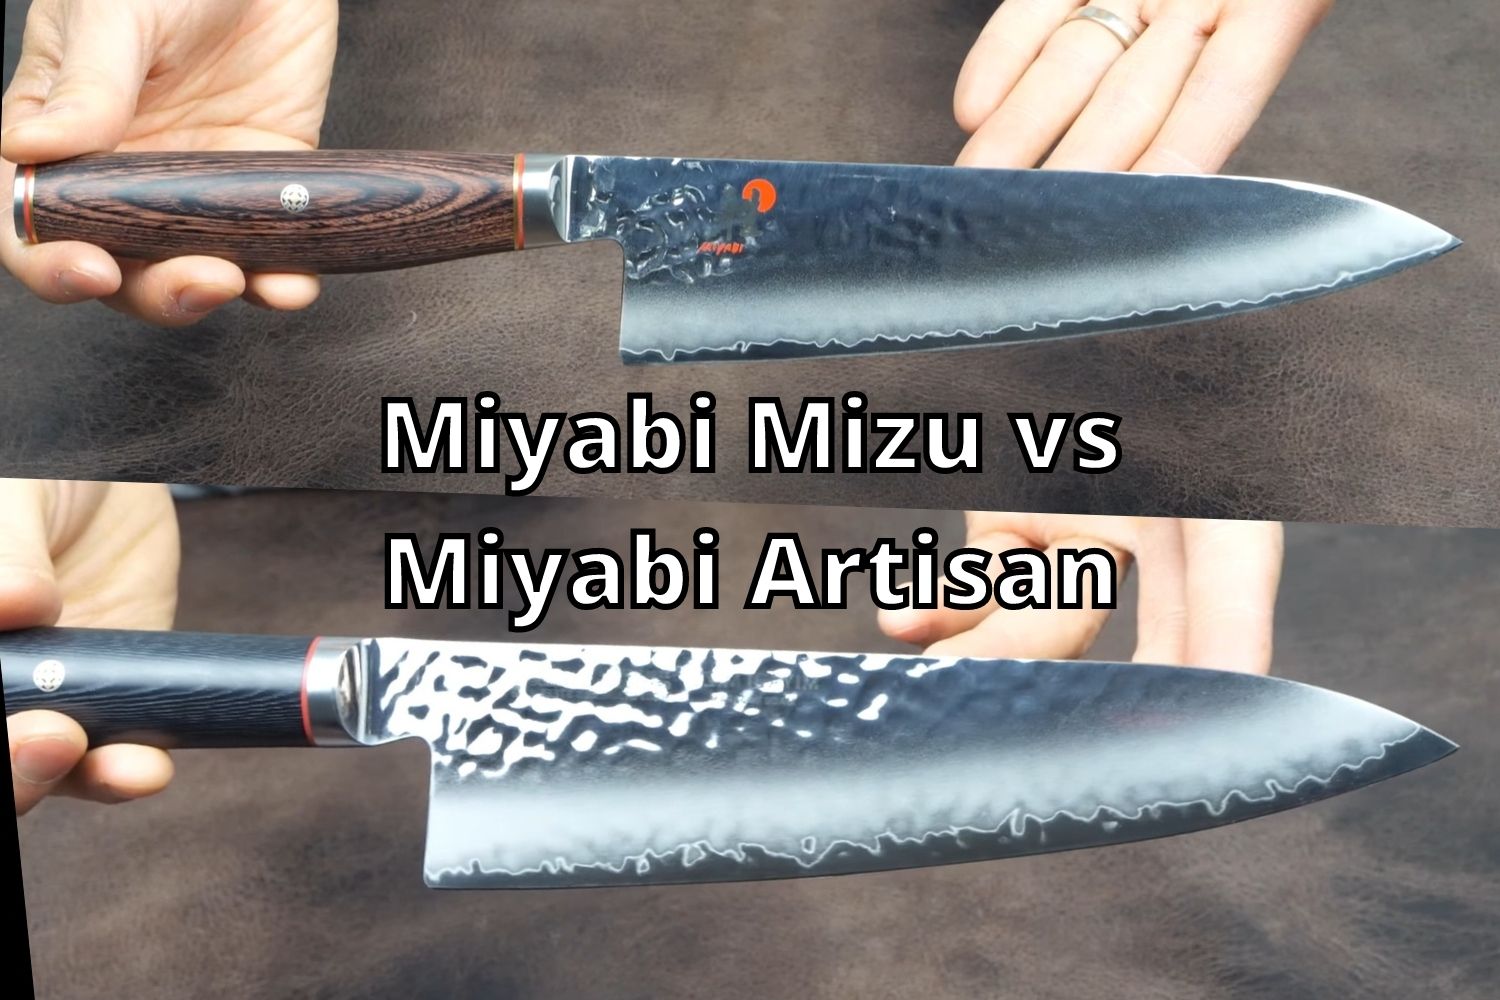 Miyabi mizu vs artisan